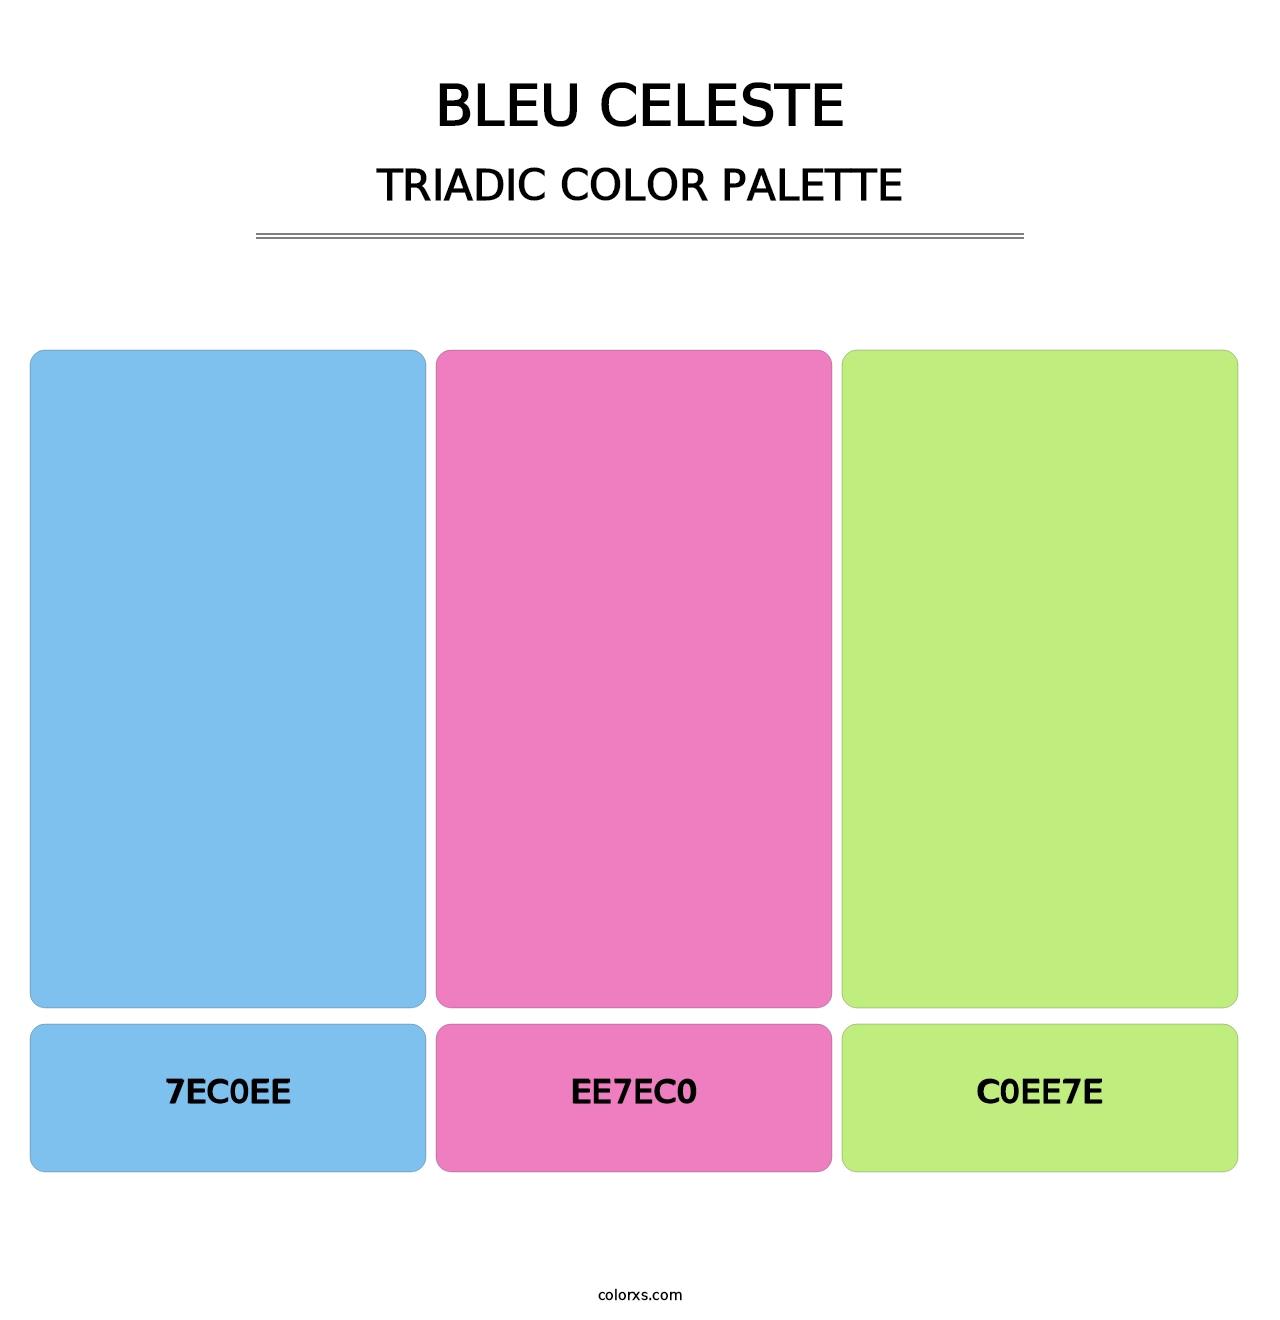 Bleu Celeste - Triadic Color Palette